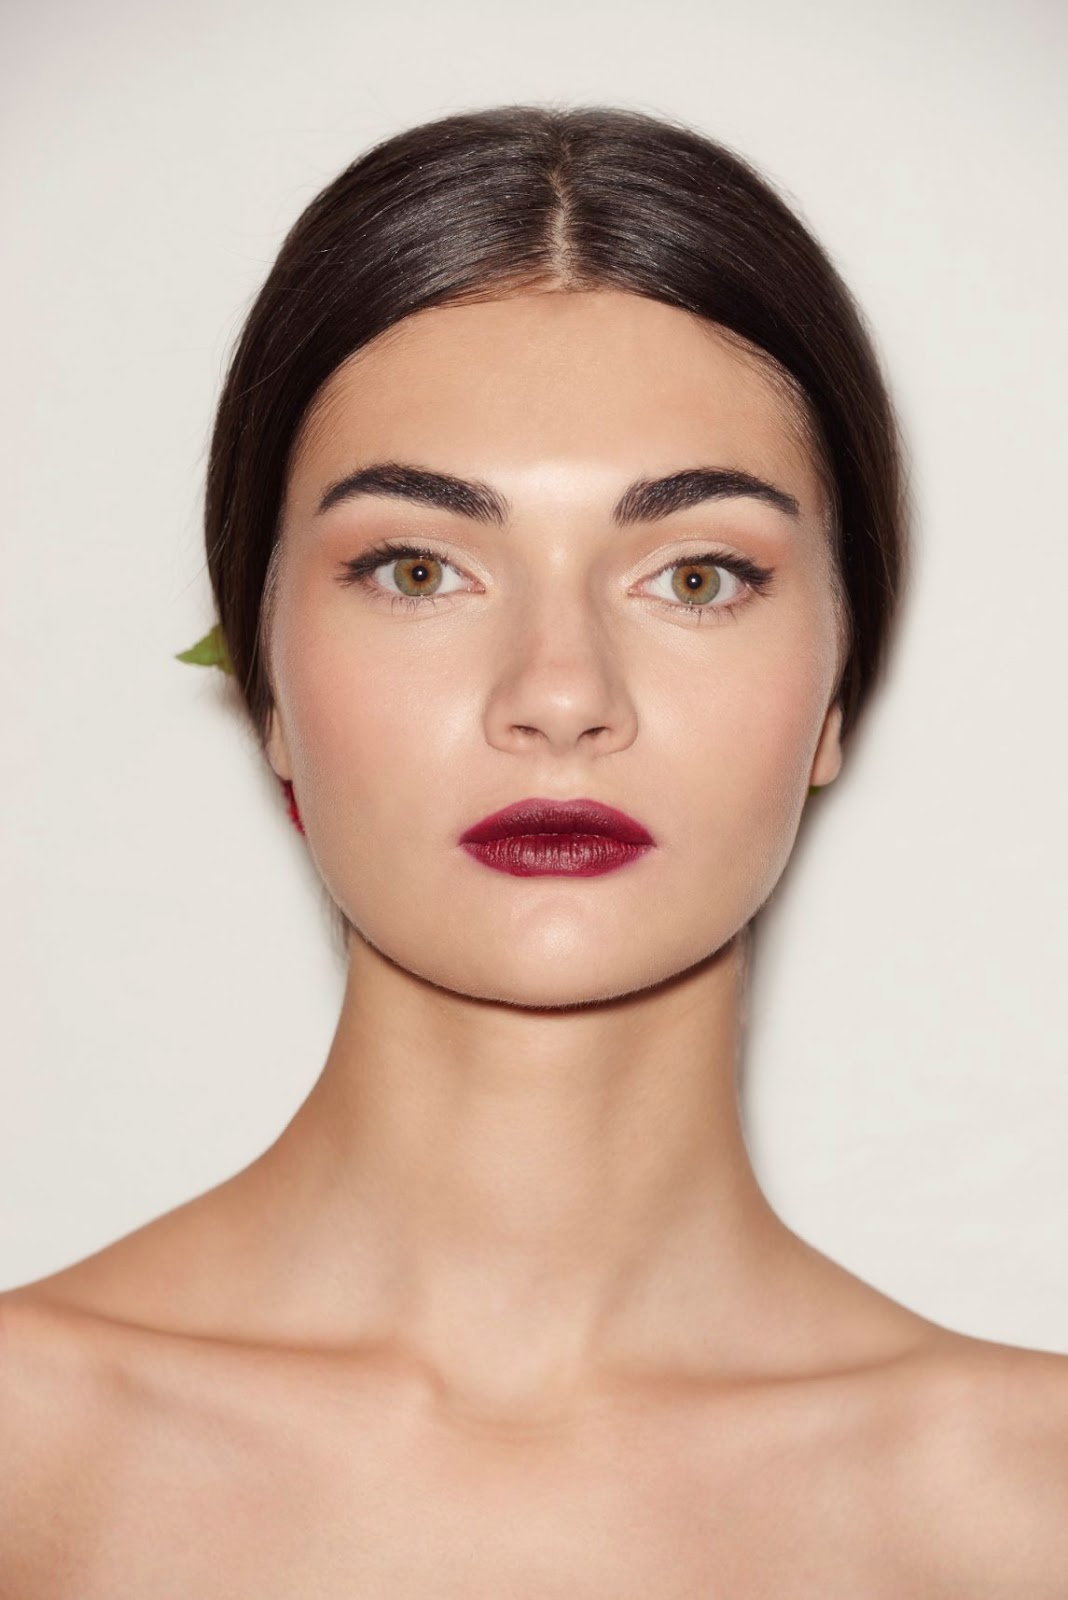 Hair how to: Redken X Dolce & Gabbana Spring/Summer 2015